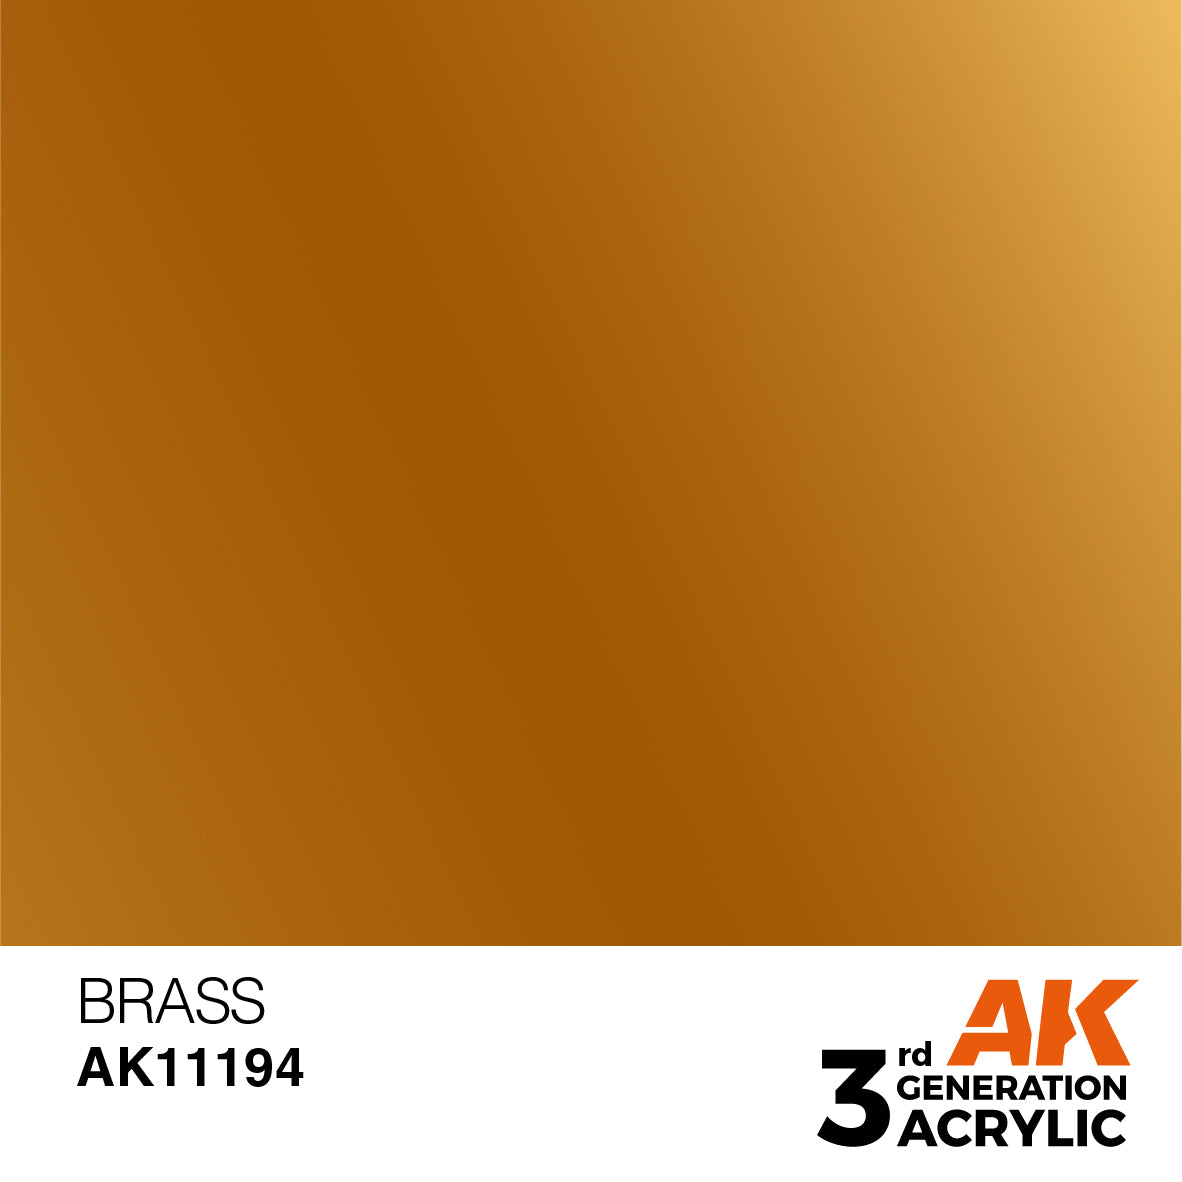 Brass – Metallic